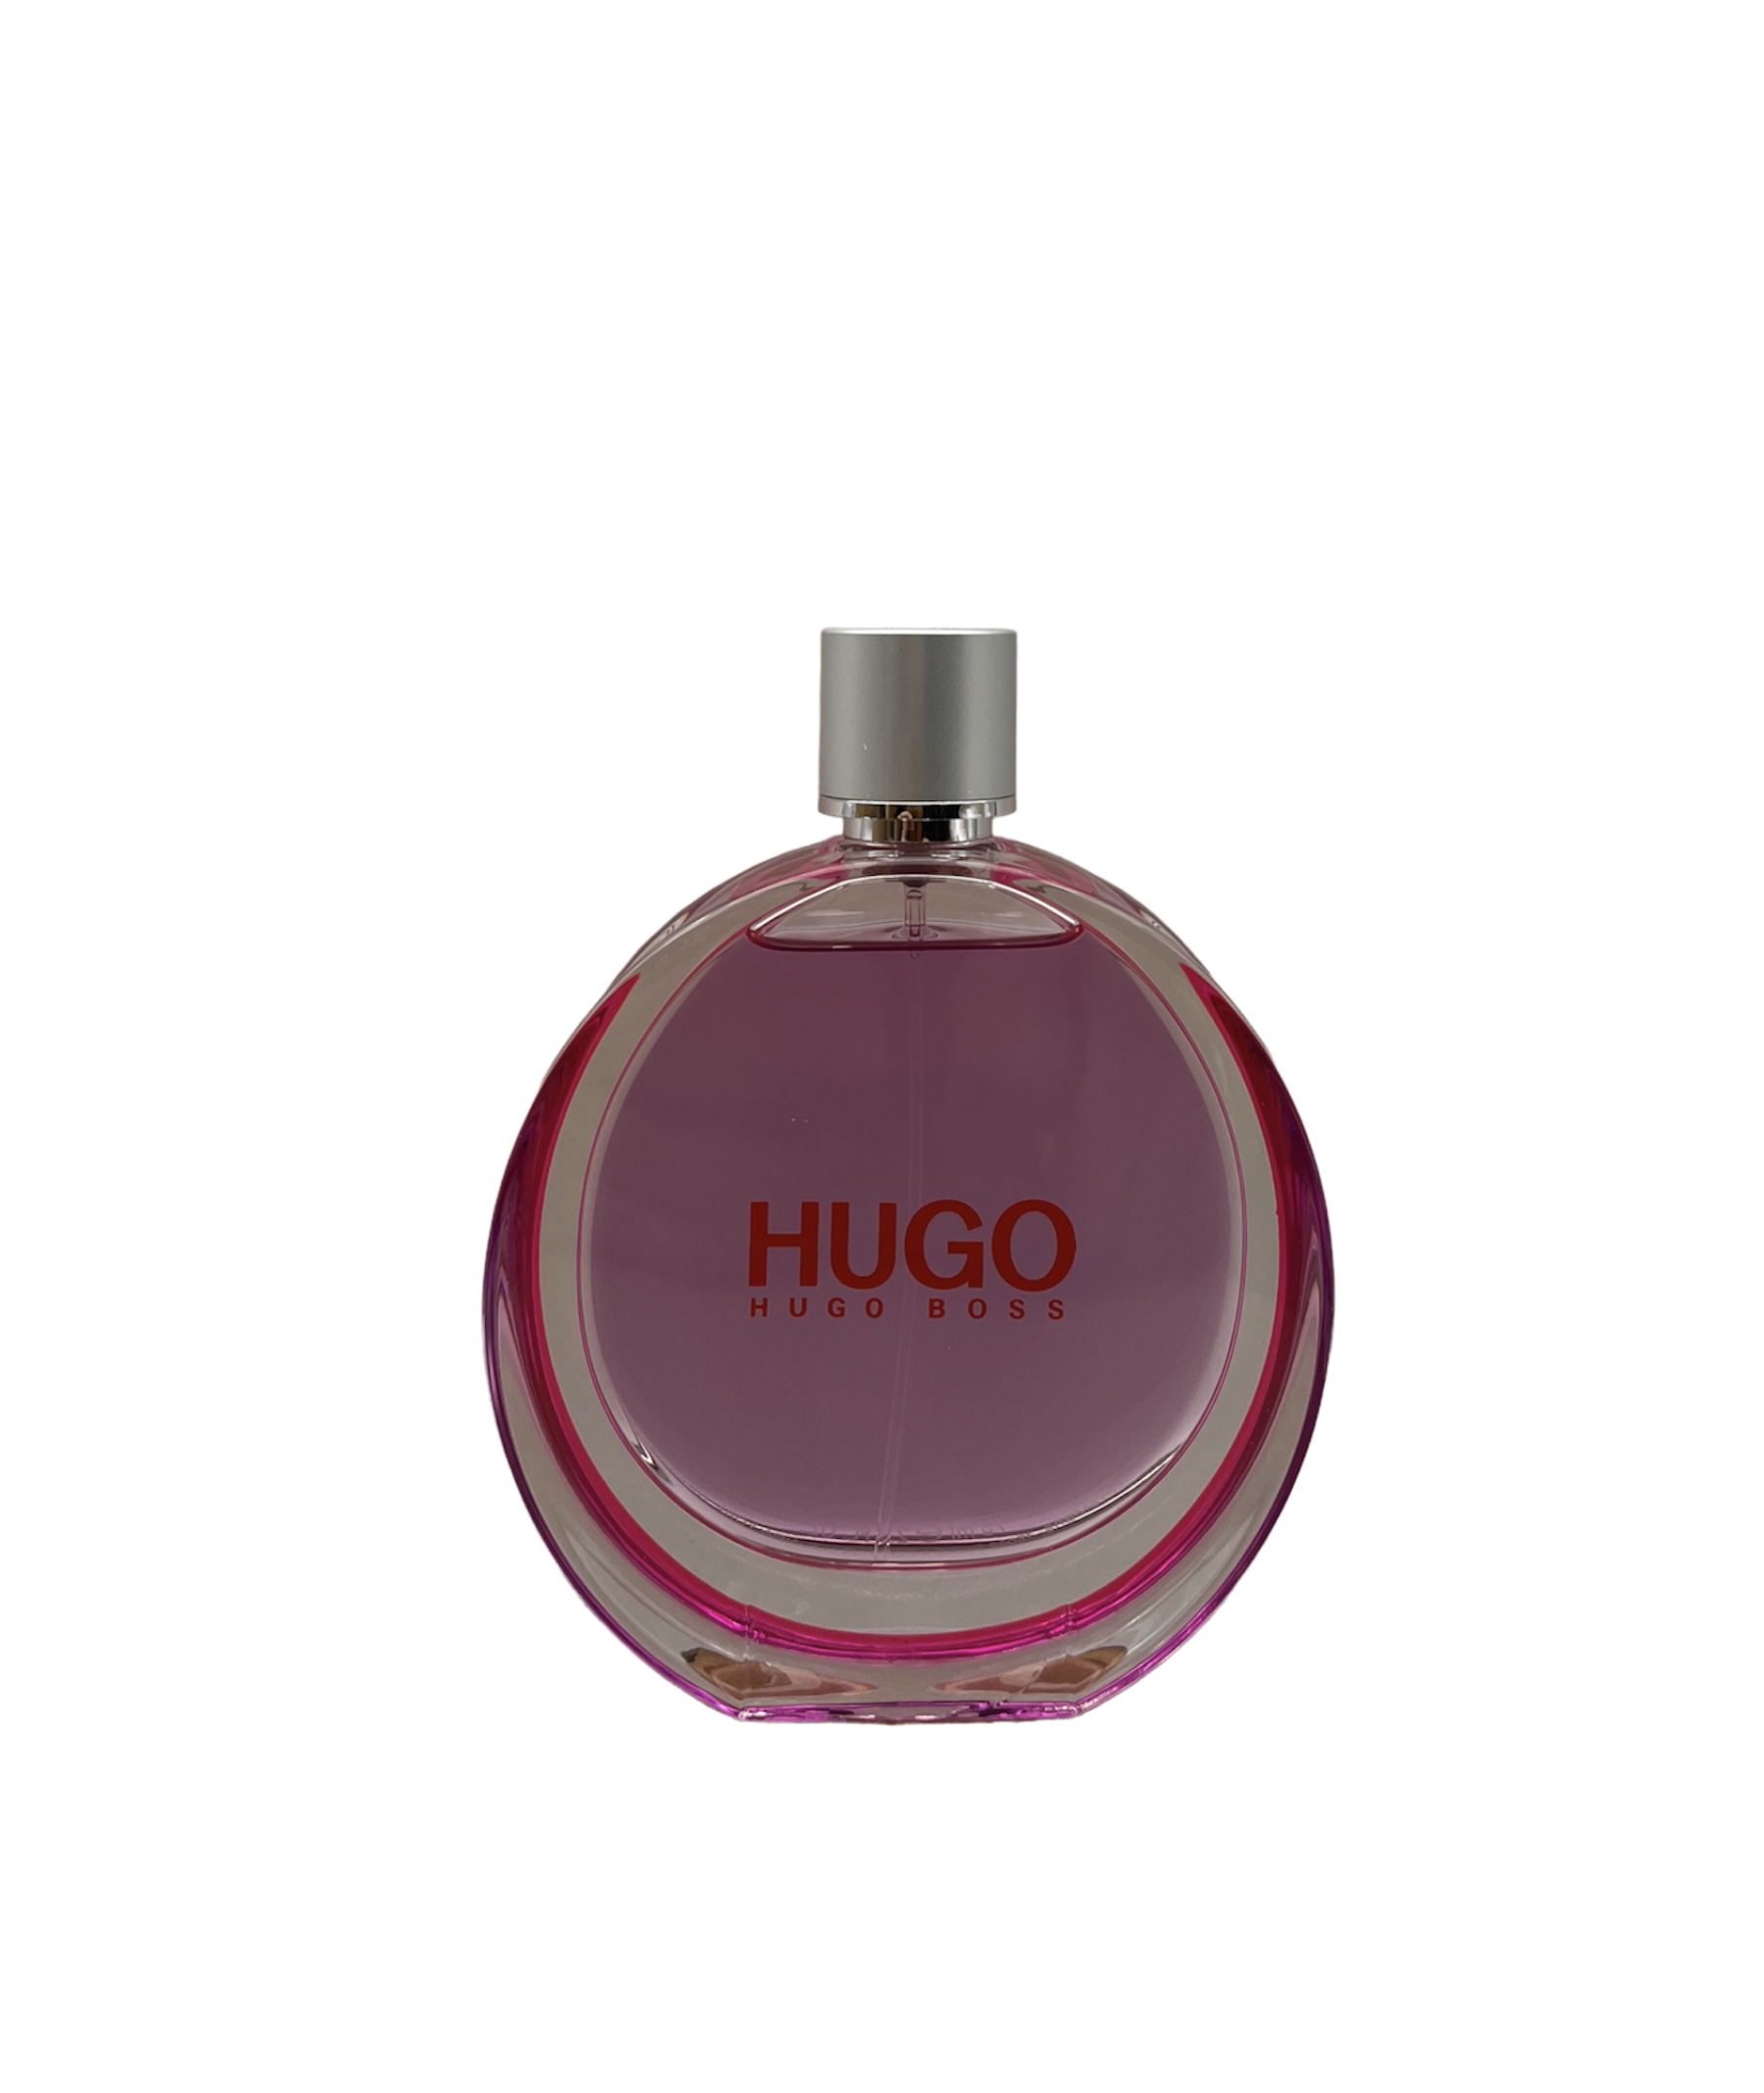 Hugo Boss Hugo Woman Extreme 75ml